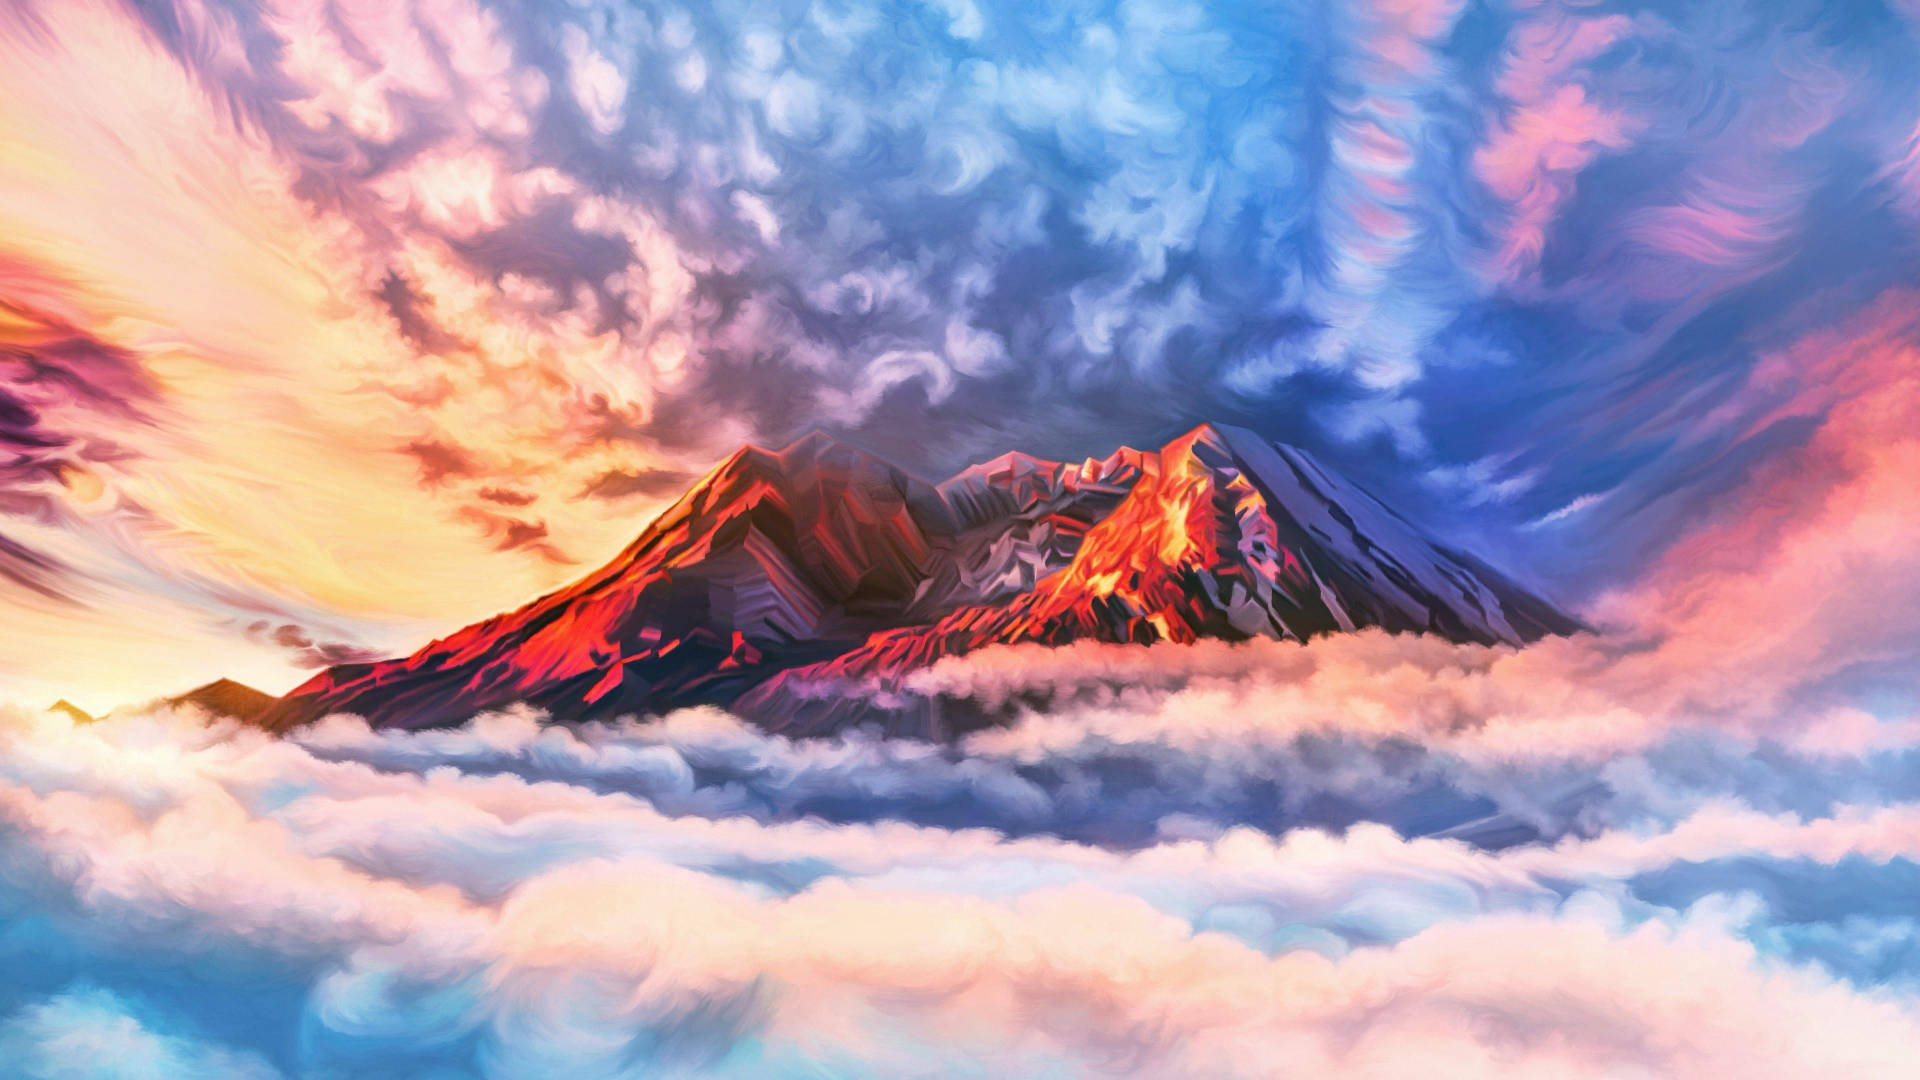 Mountain Peak Paint Art Wallpaper